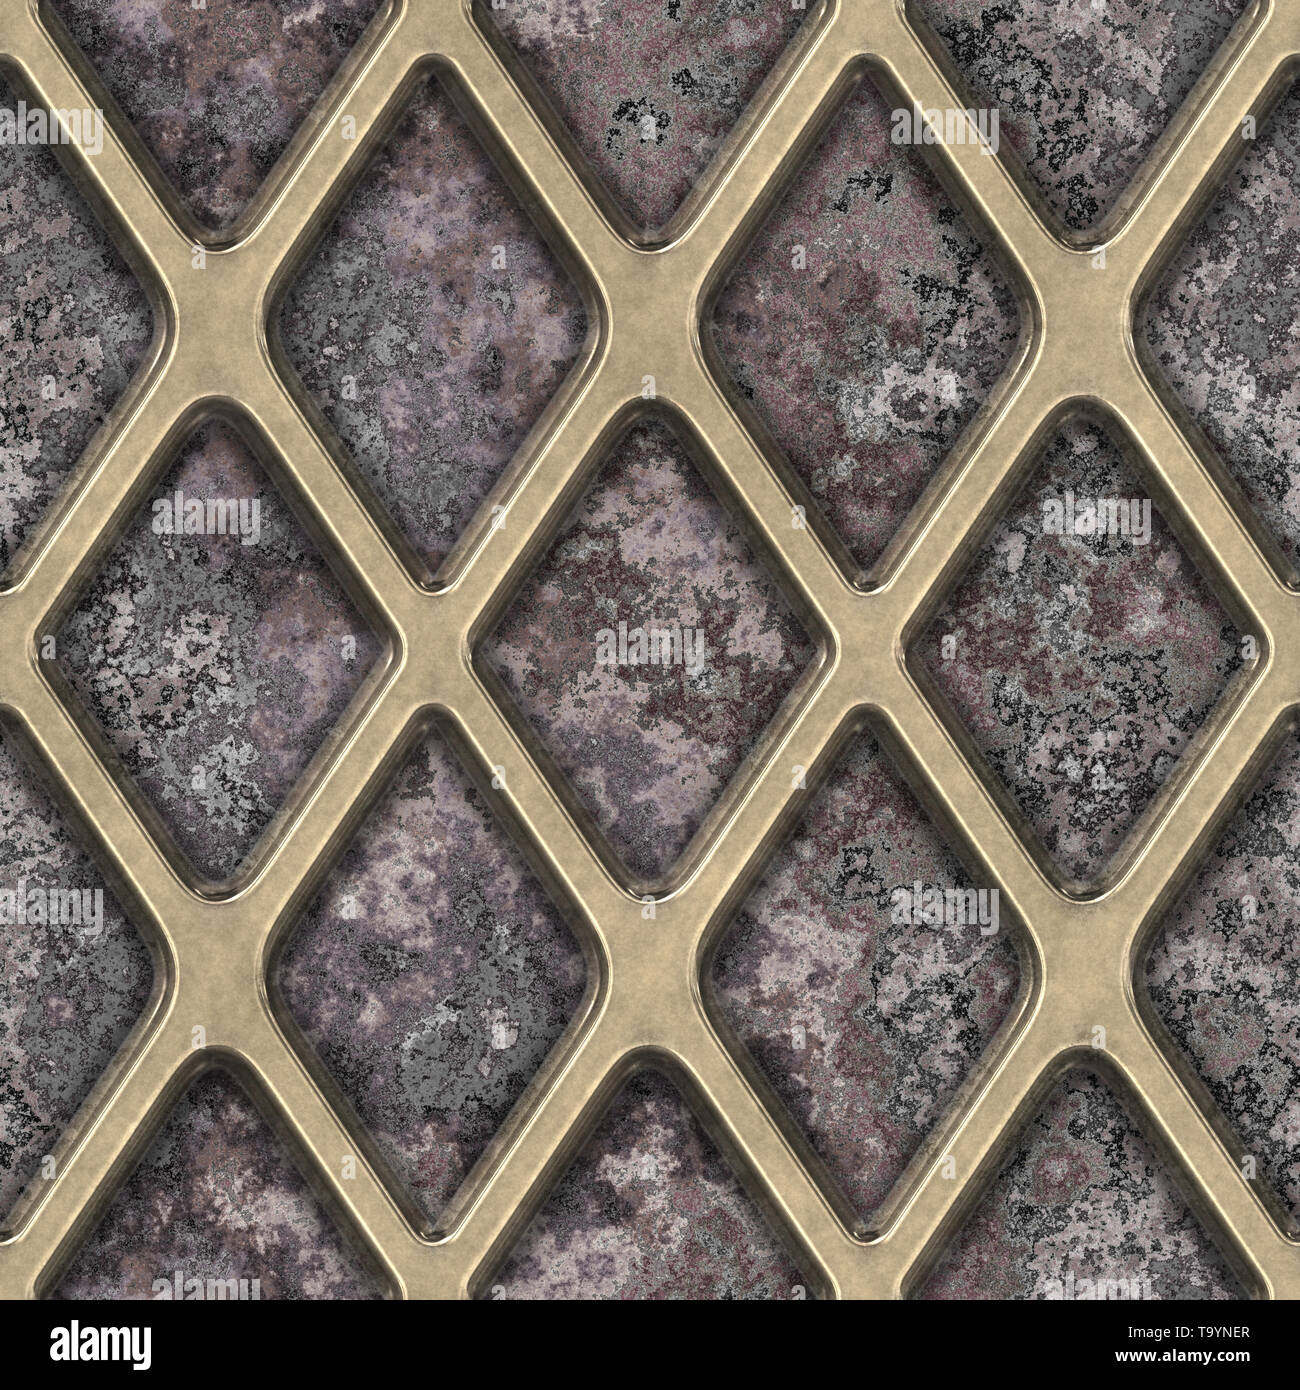 Grate on Granite Seamless Texture Tile Stock Photo